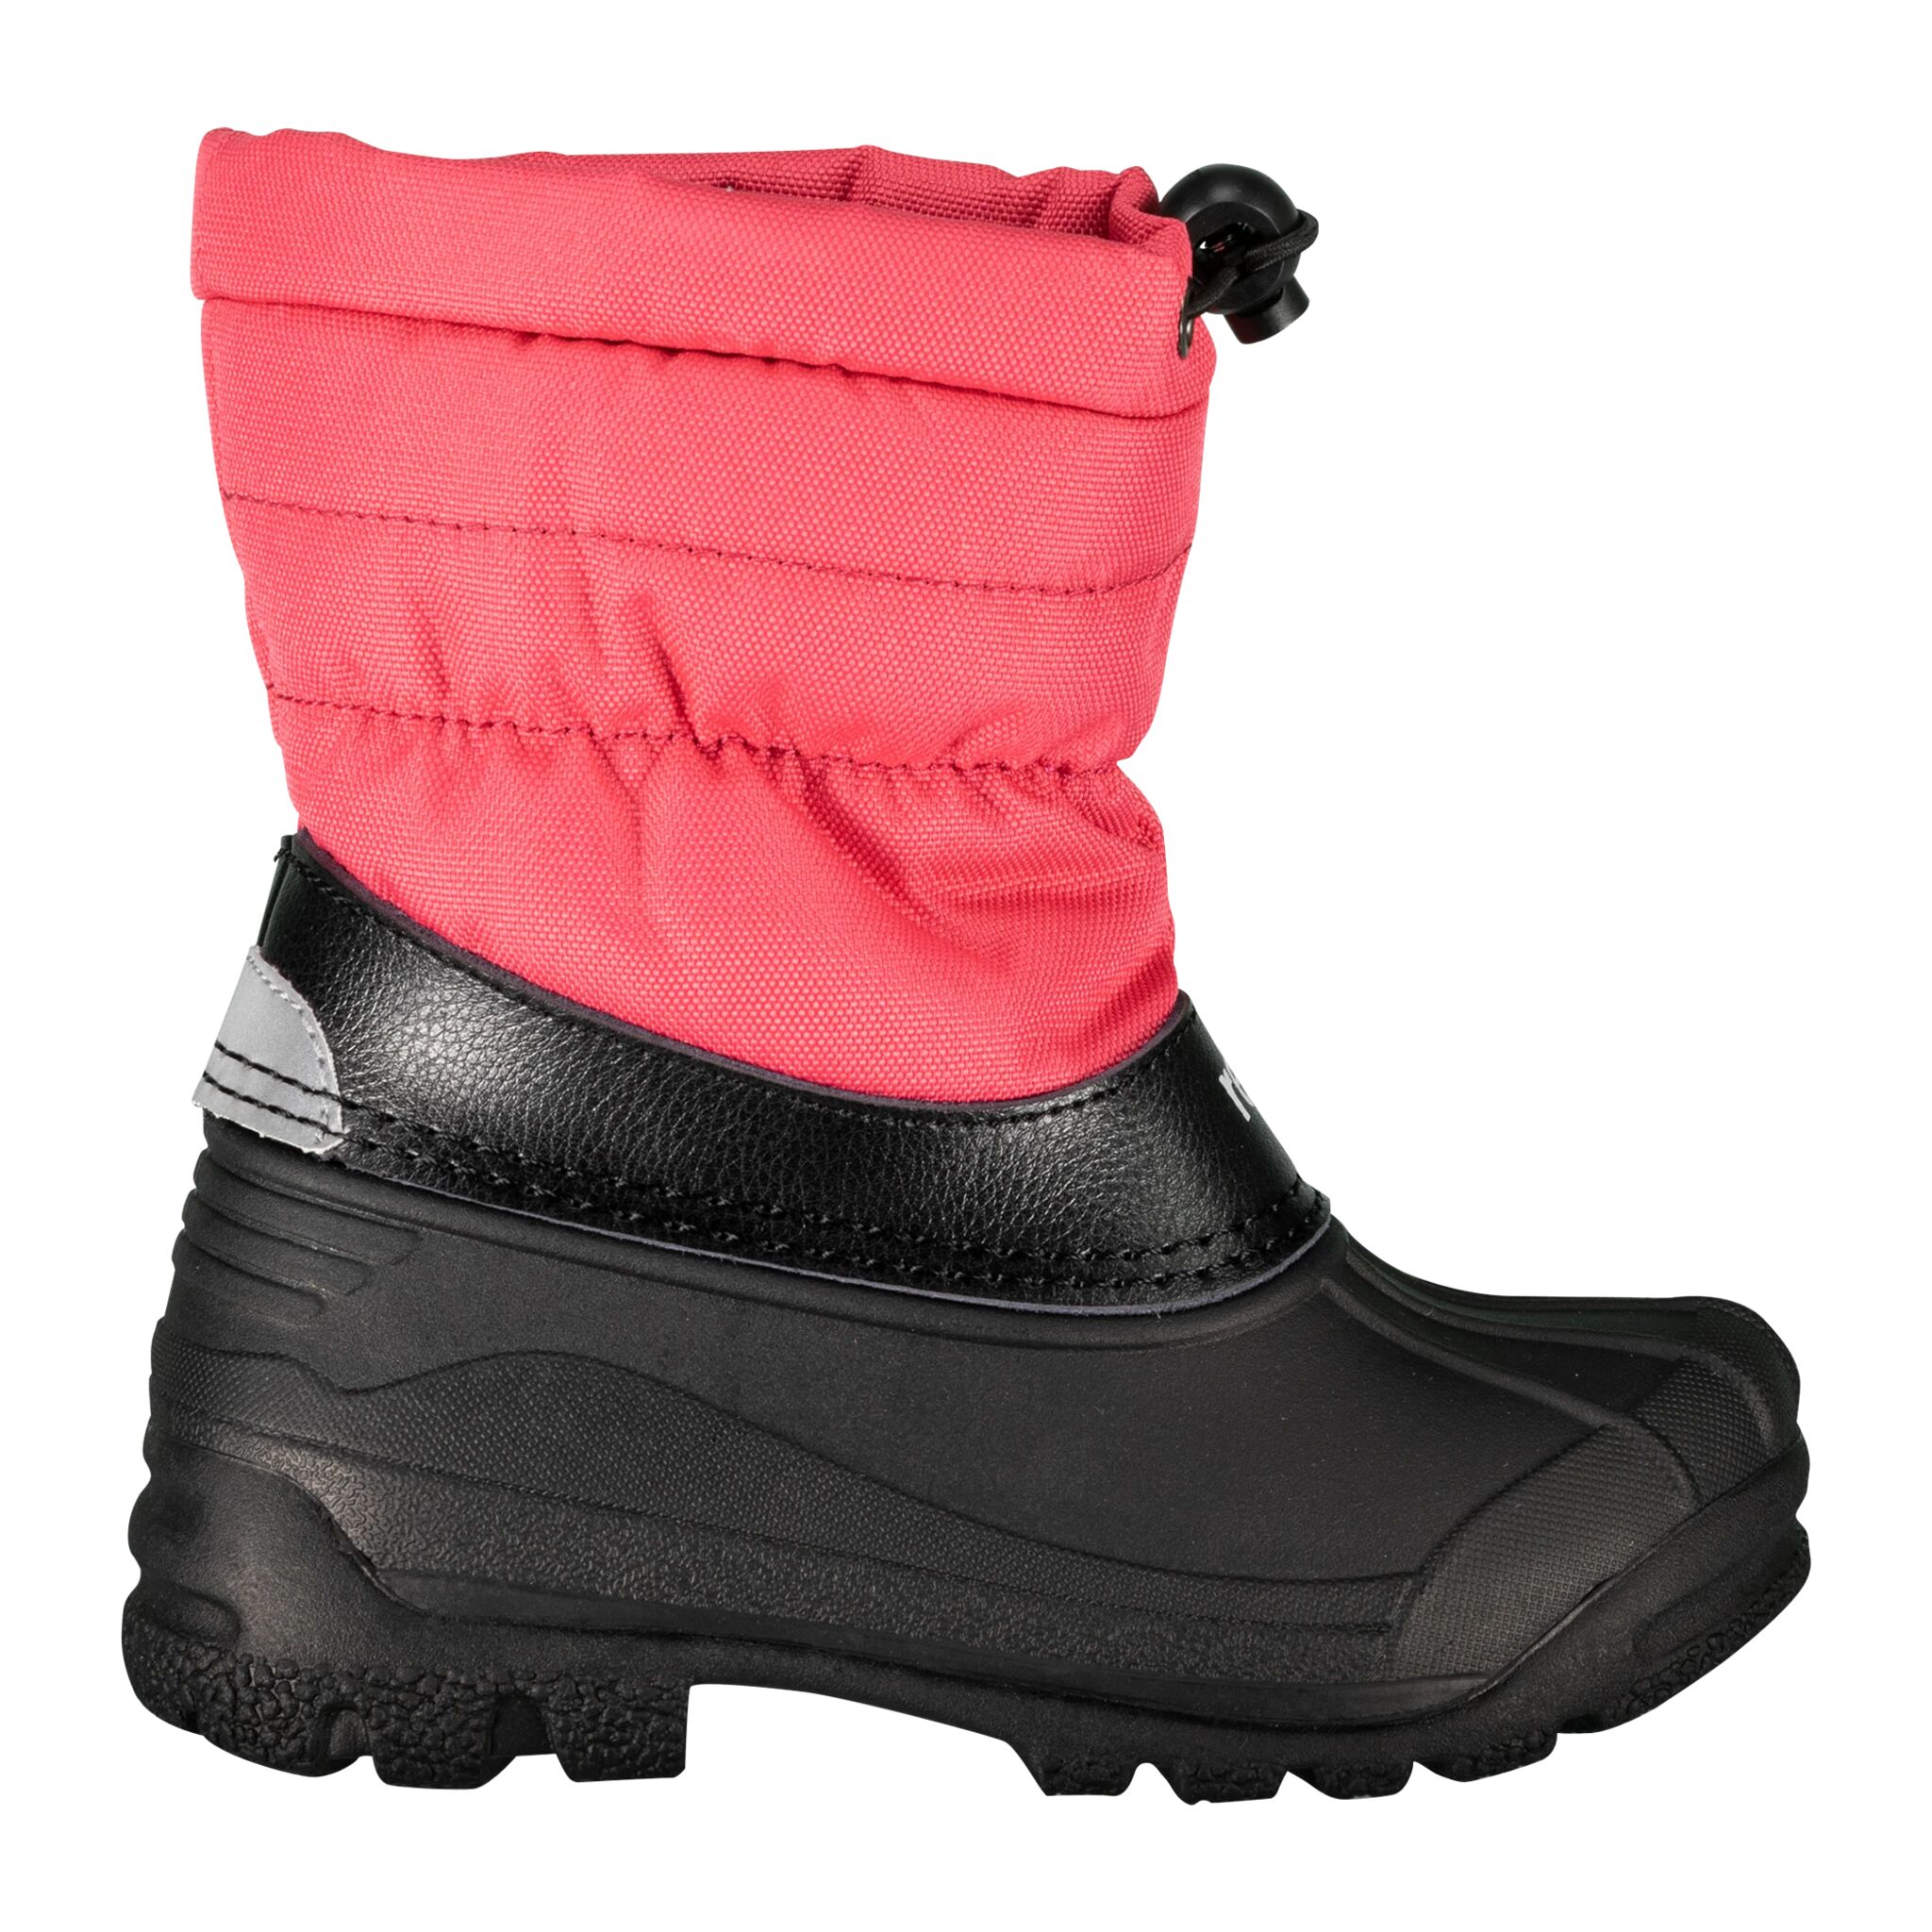 Reima Winter boots Nefar, vintersko barn 33 Azalea Pink